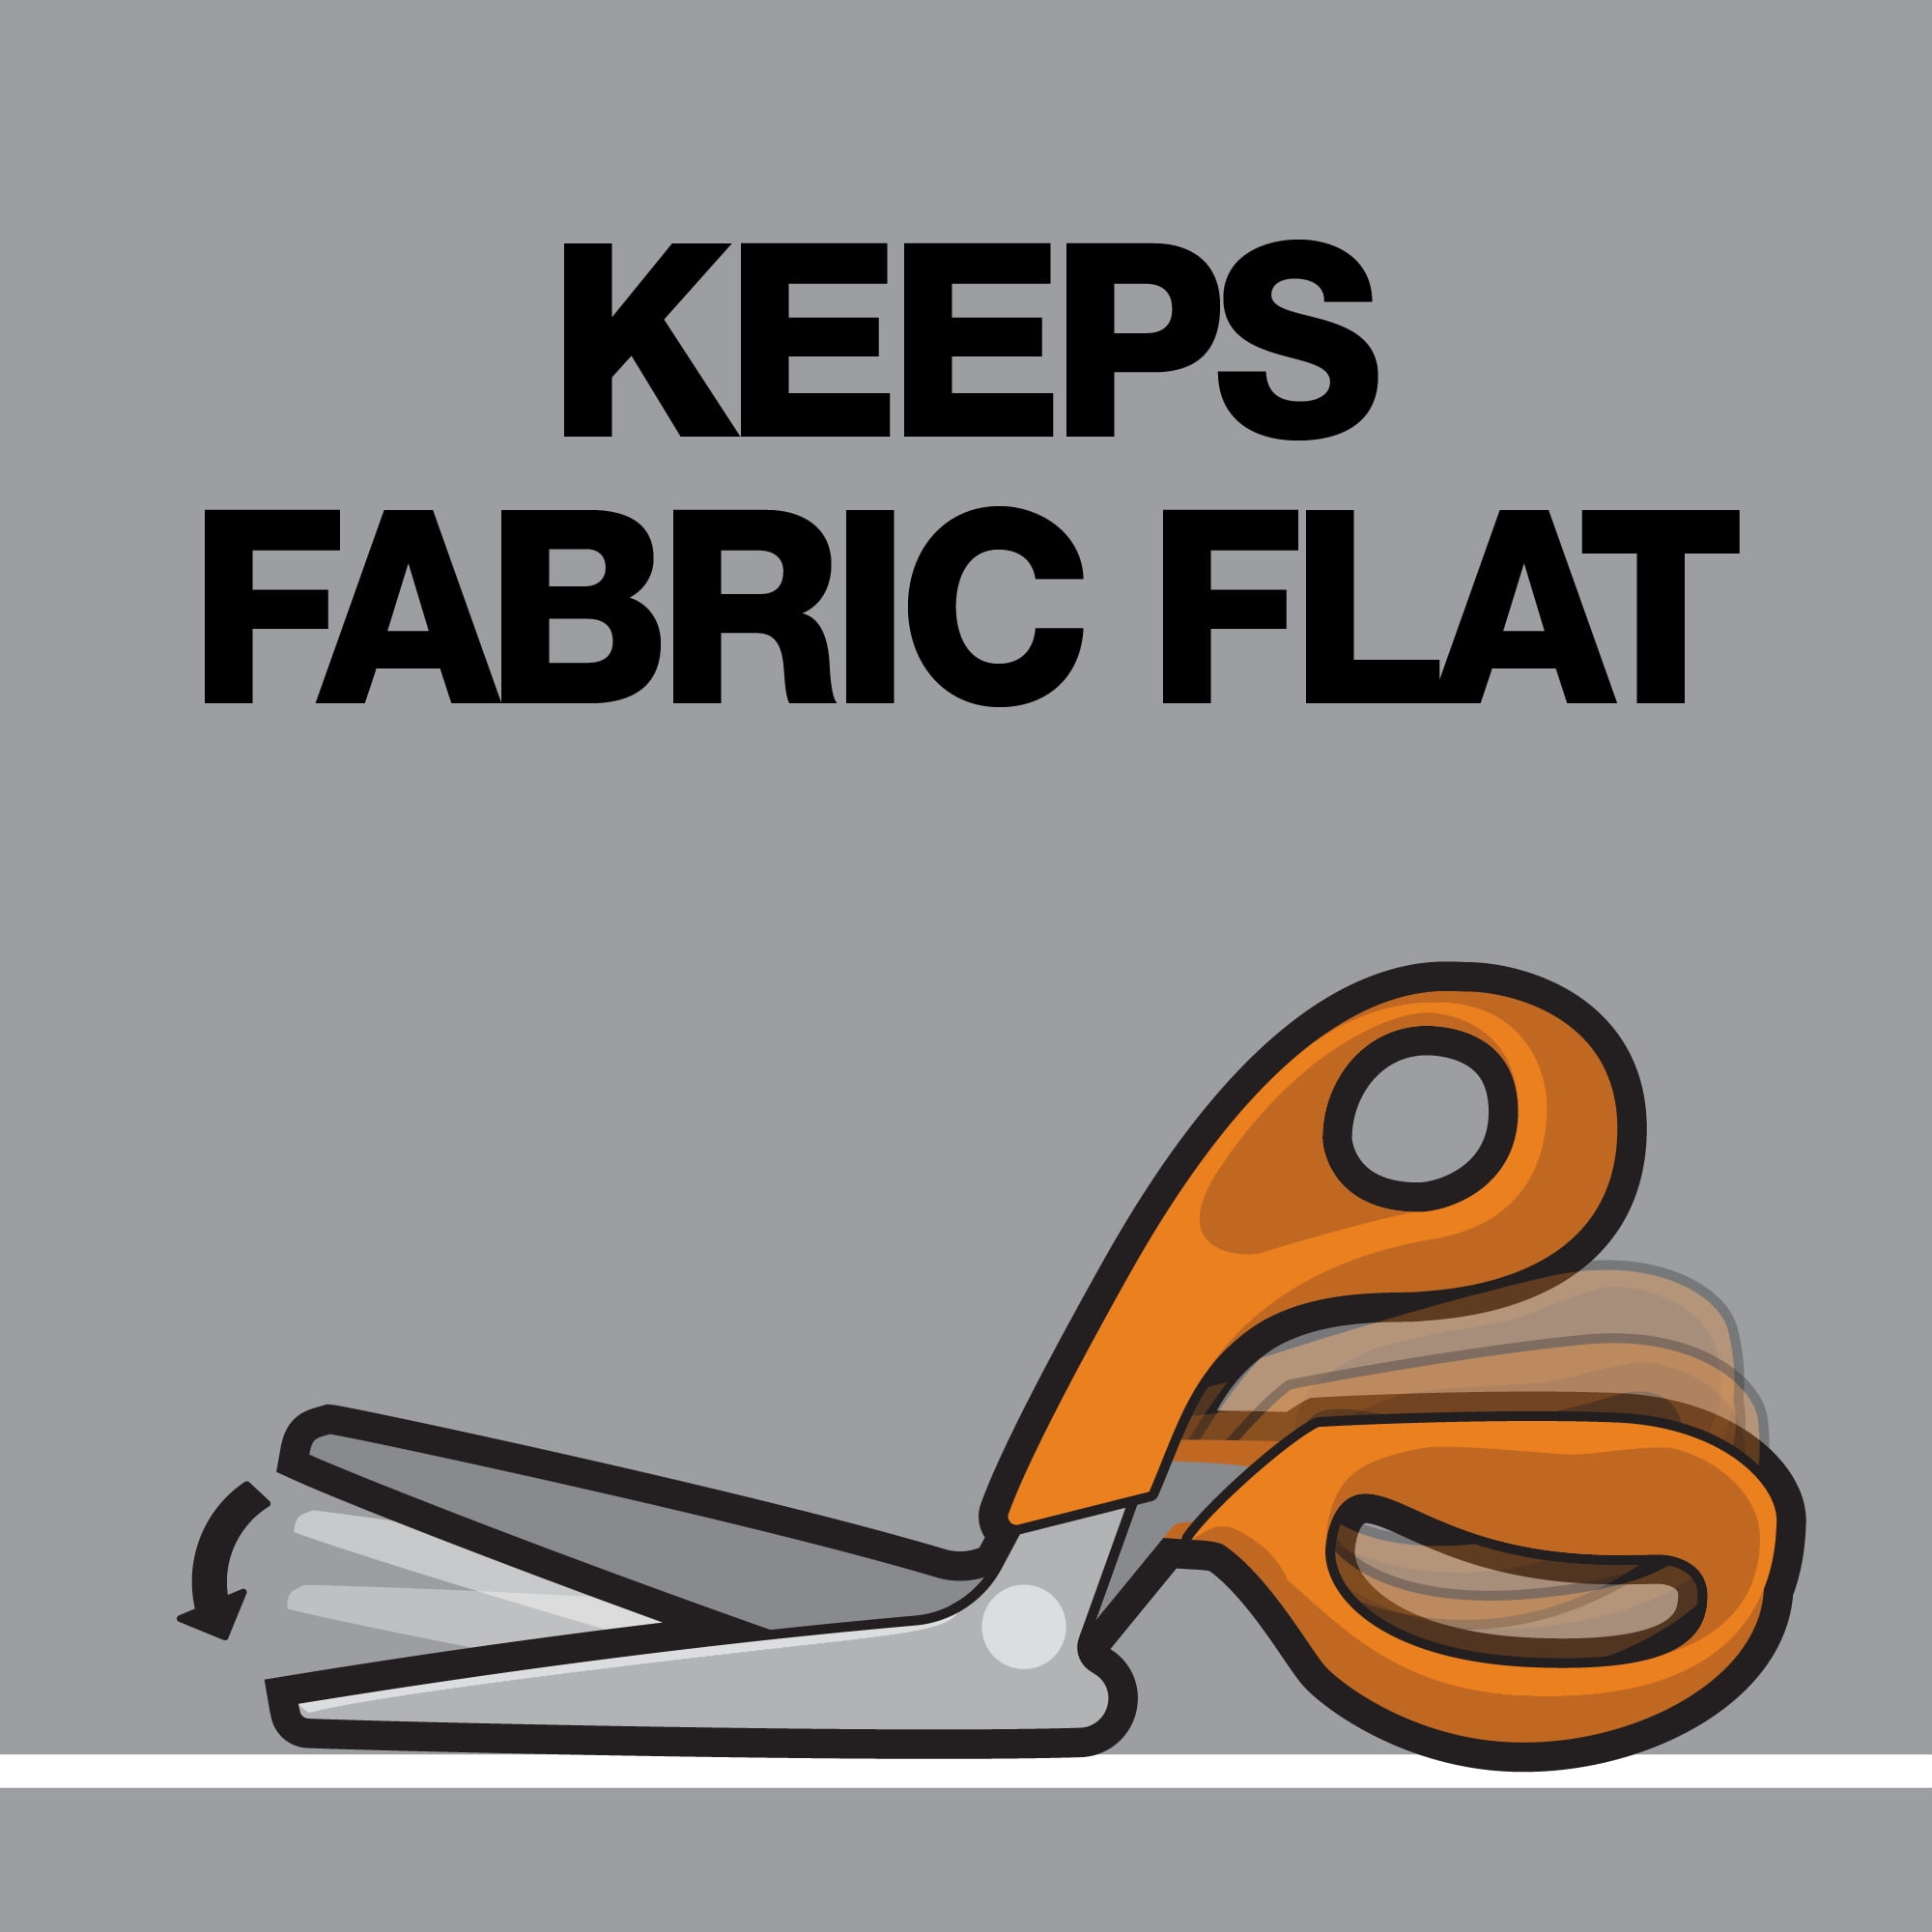 Fiskars RazorEdge Easy Action Tabletop Fabric 8 Inches Shears Scissors 9085